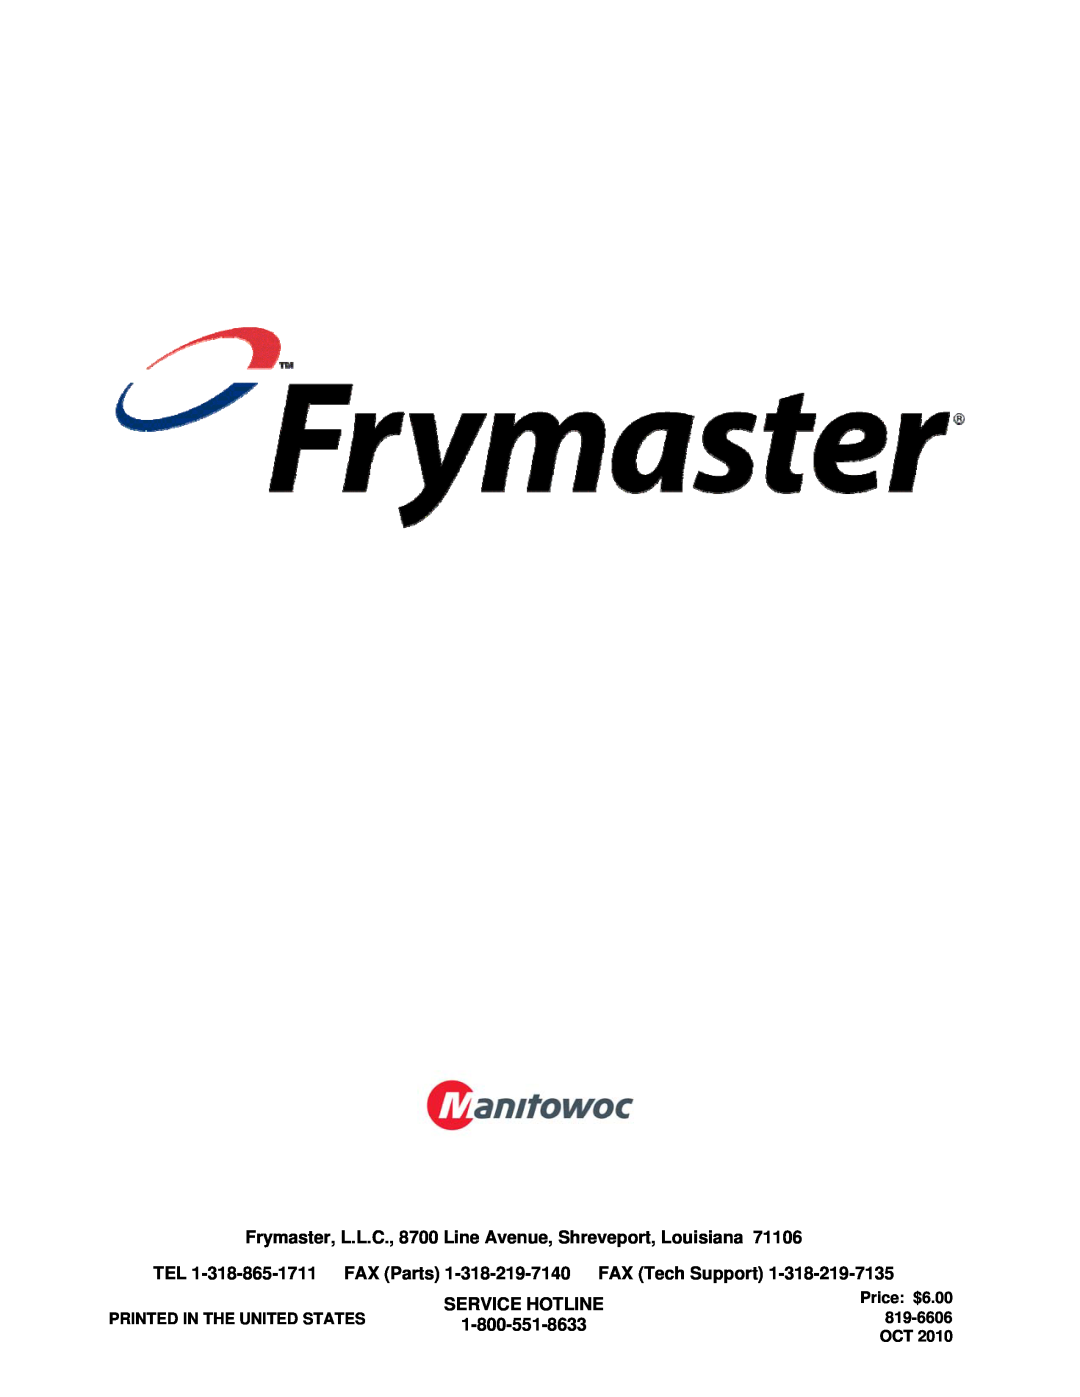 Frymaster UHC-HD manual Frymaster, L.L.C., 8700 Line Avenue, Shreveport, Louisiana, Service Hotline, Price $6.00, 819-6606 